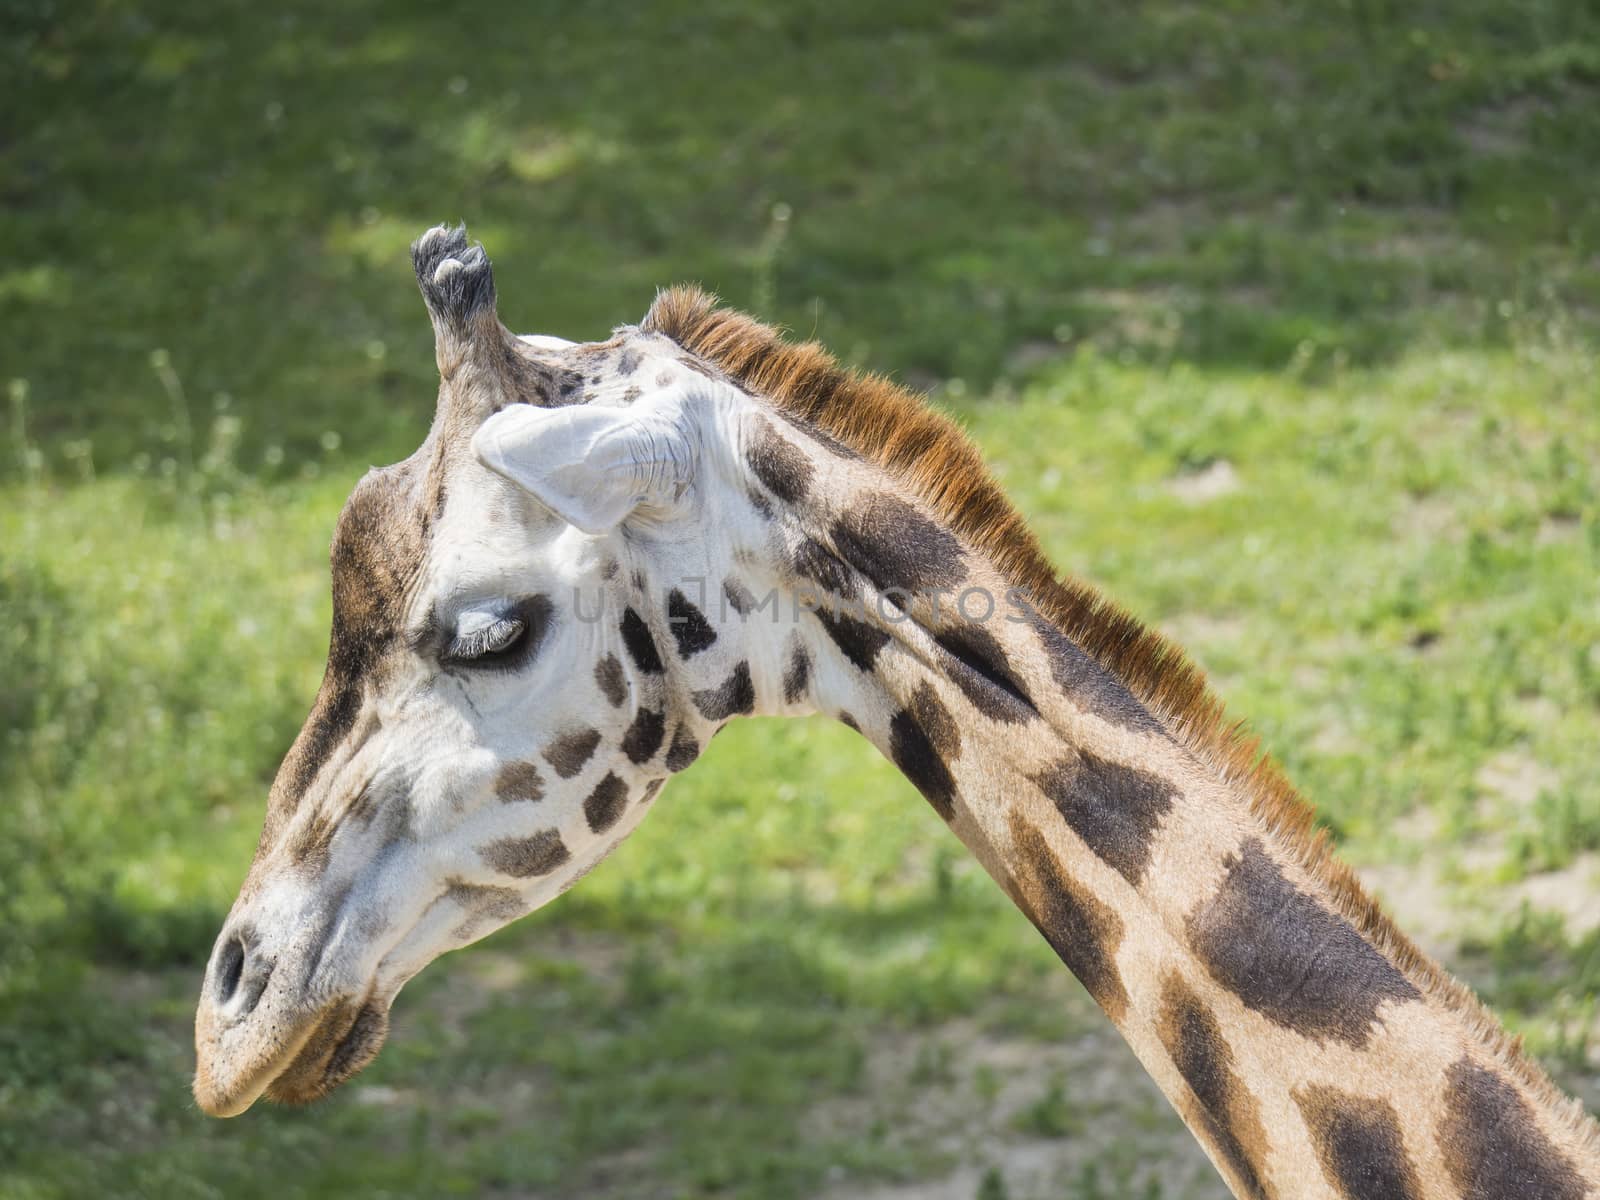 Close up portrait of giraffe head, Giraffa camelopardalis camelopardalis Linnaeus, profile view, green bokeh background by Henkeova